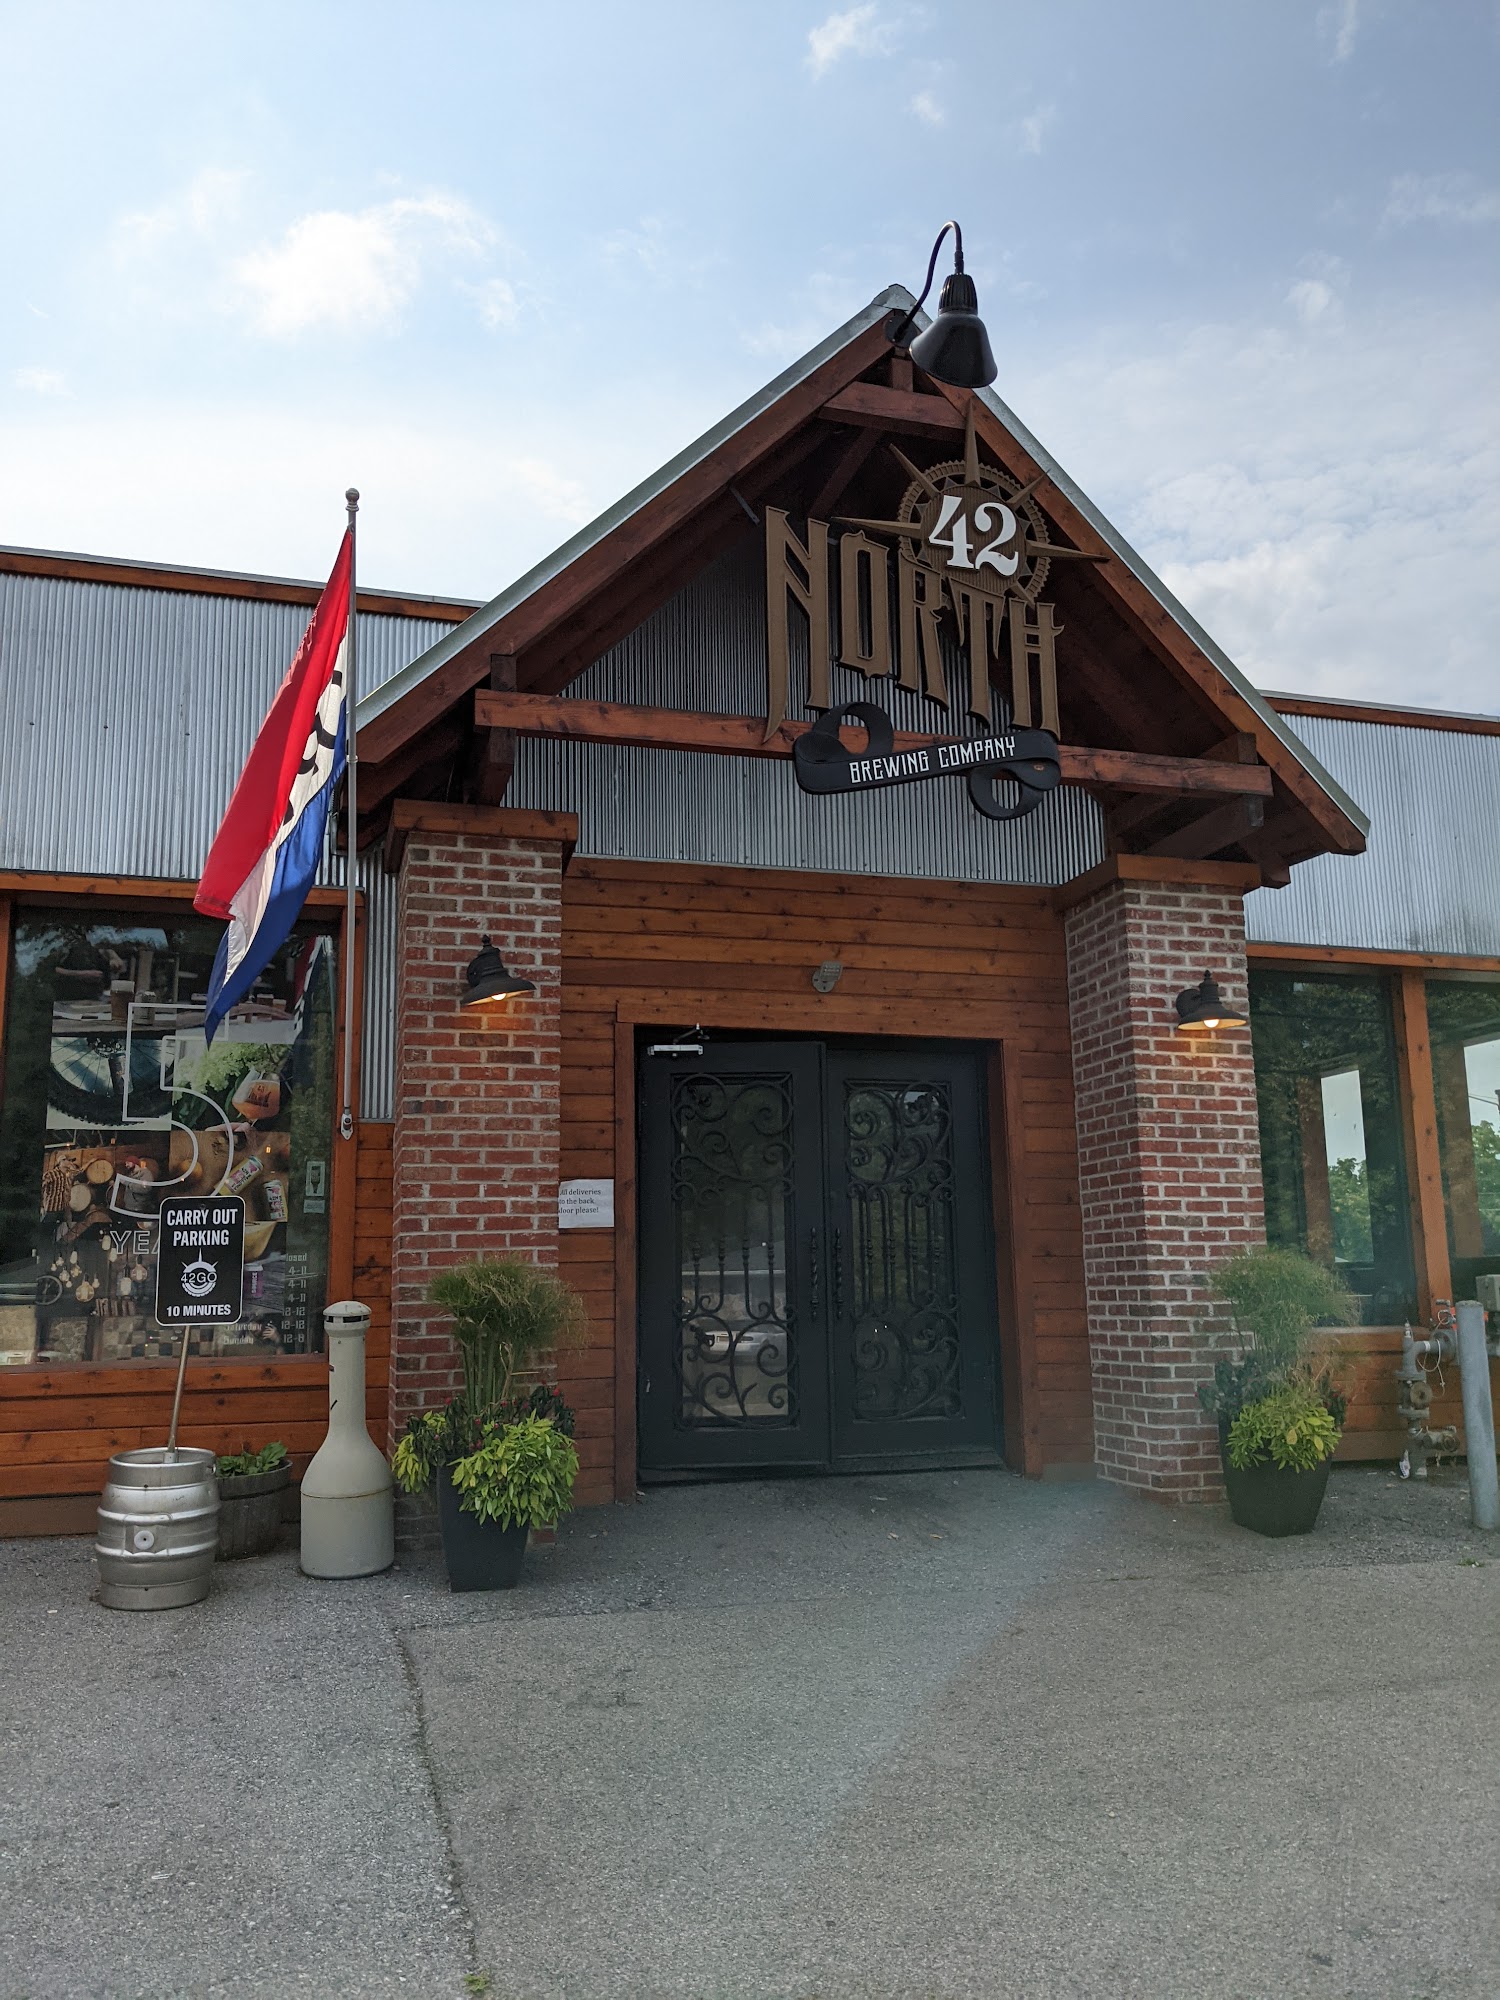 42 North Brewing Company